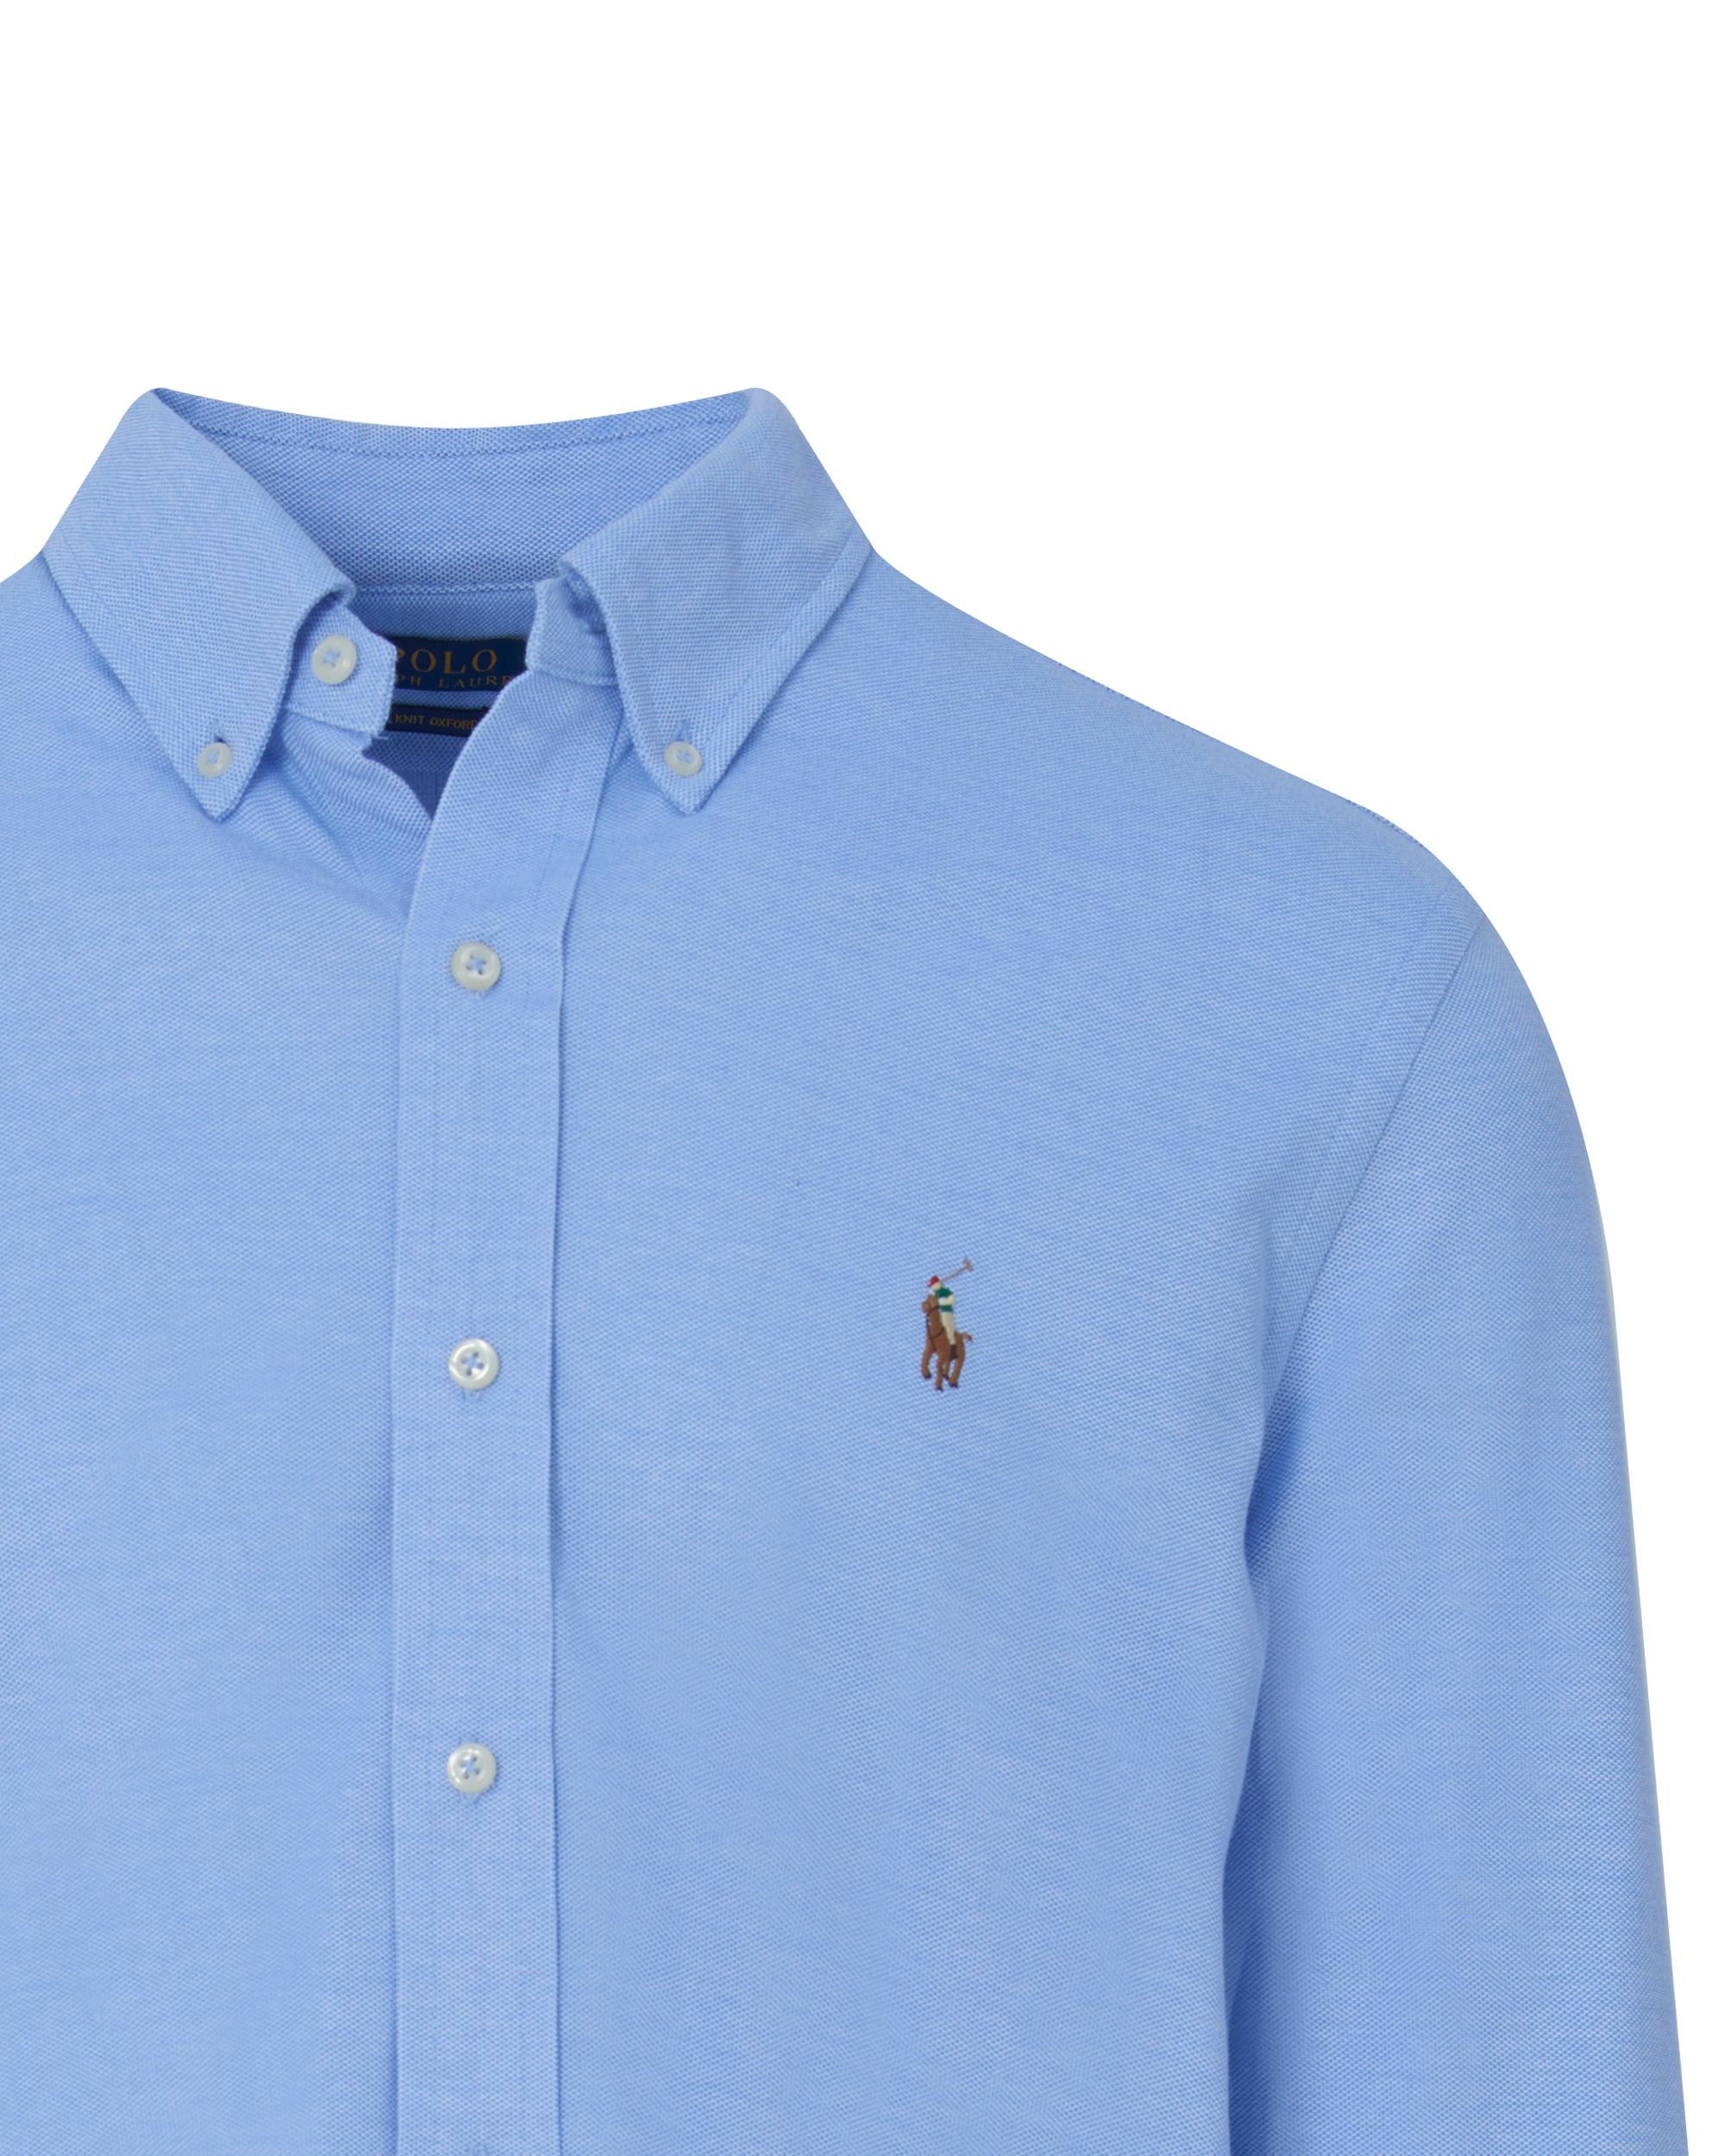 Polo Ralph Lauren Casual Overhemd LM Blauw 091537-001-L